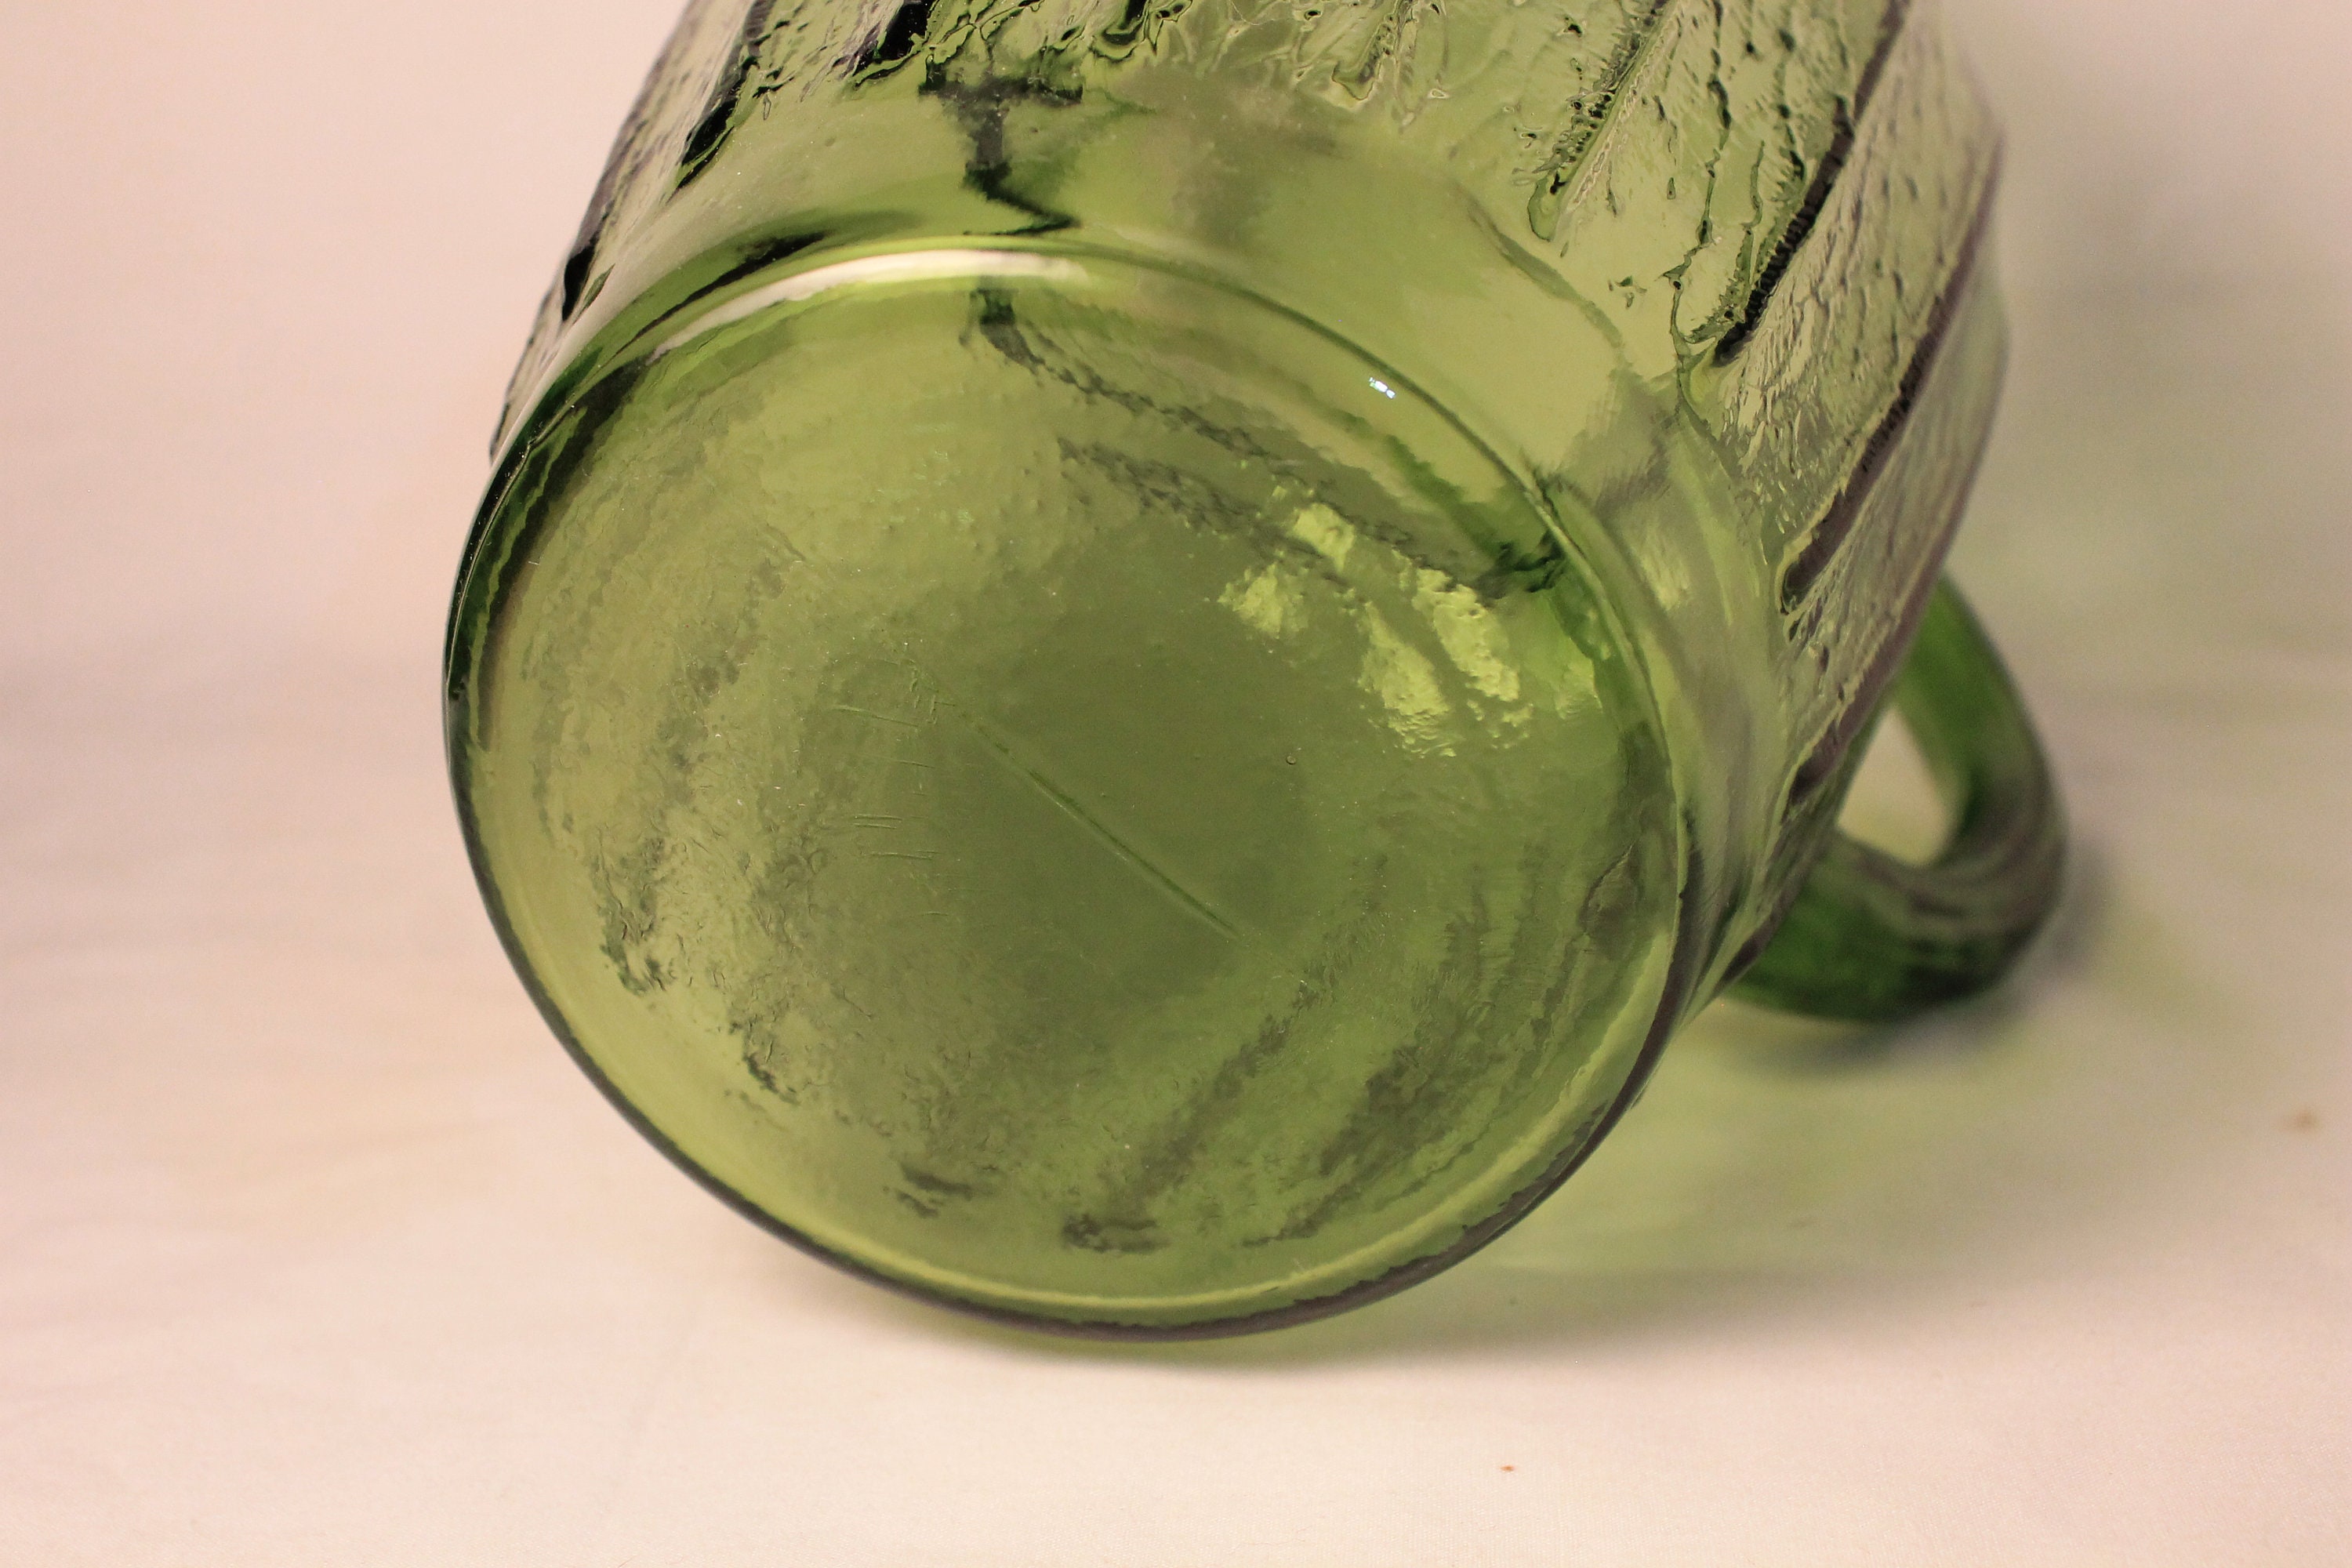 VINTAGE GREEN GLASS PITCHERS - Privet House Supply